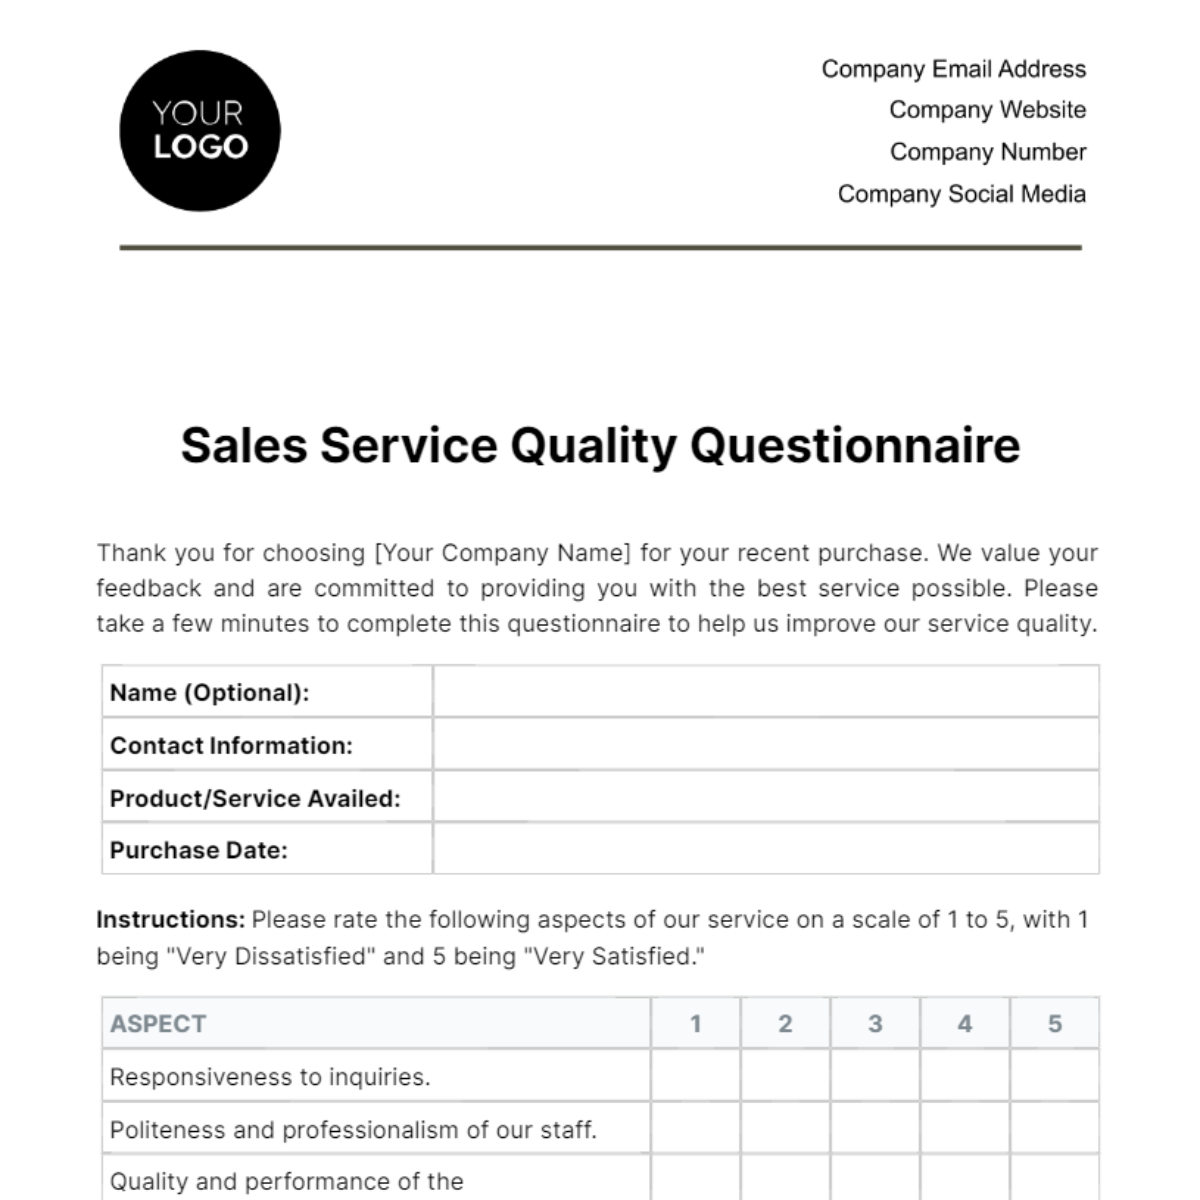 Sales Service Quality Questionnaire Template